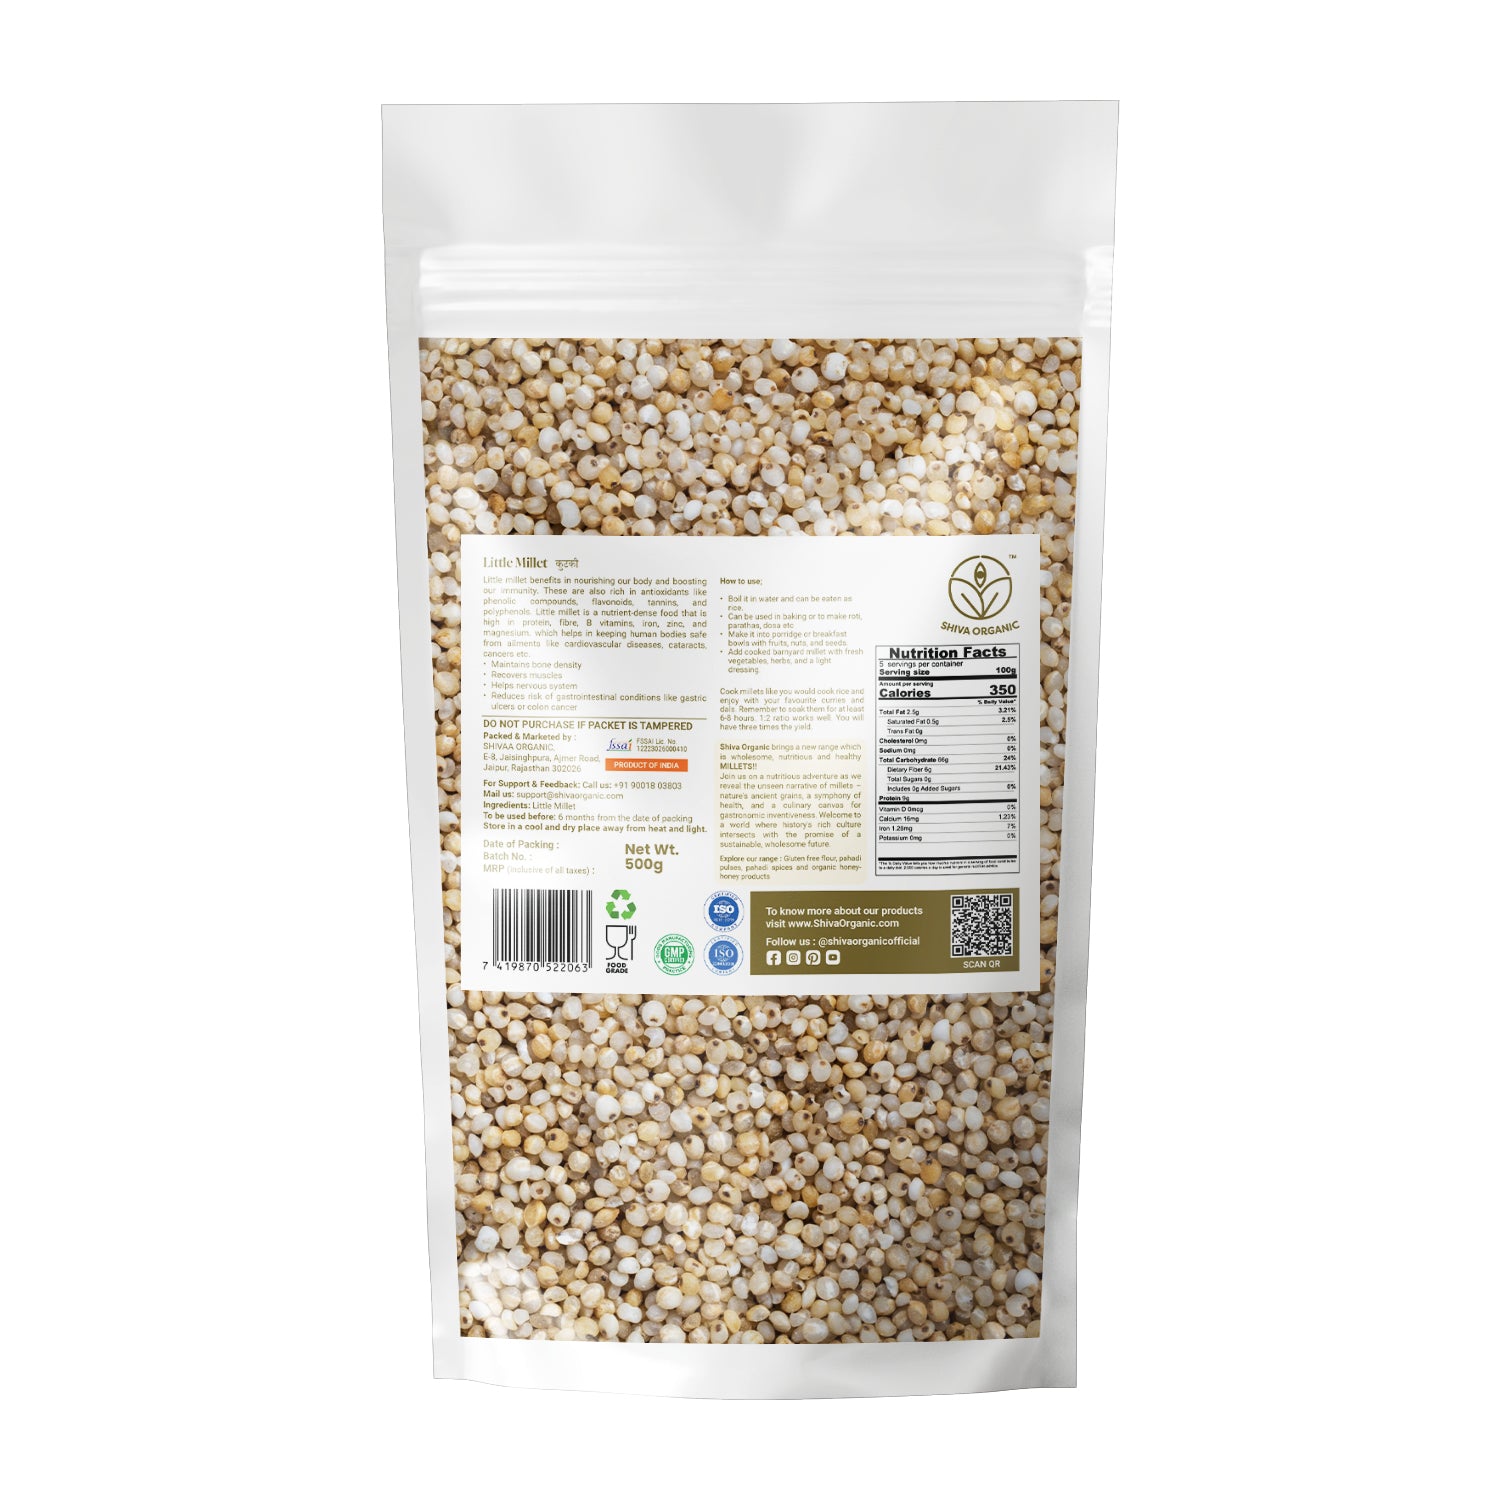 Little Millet 500g | Shiva Organic